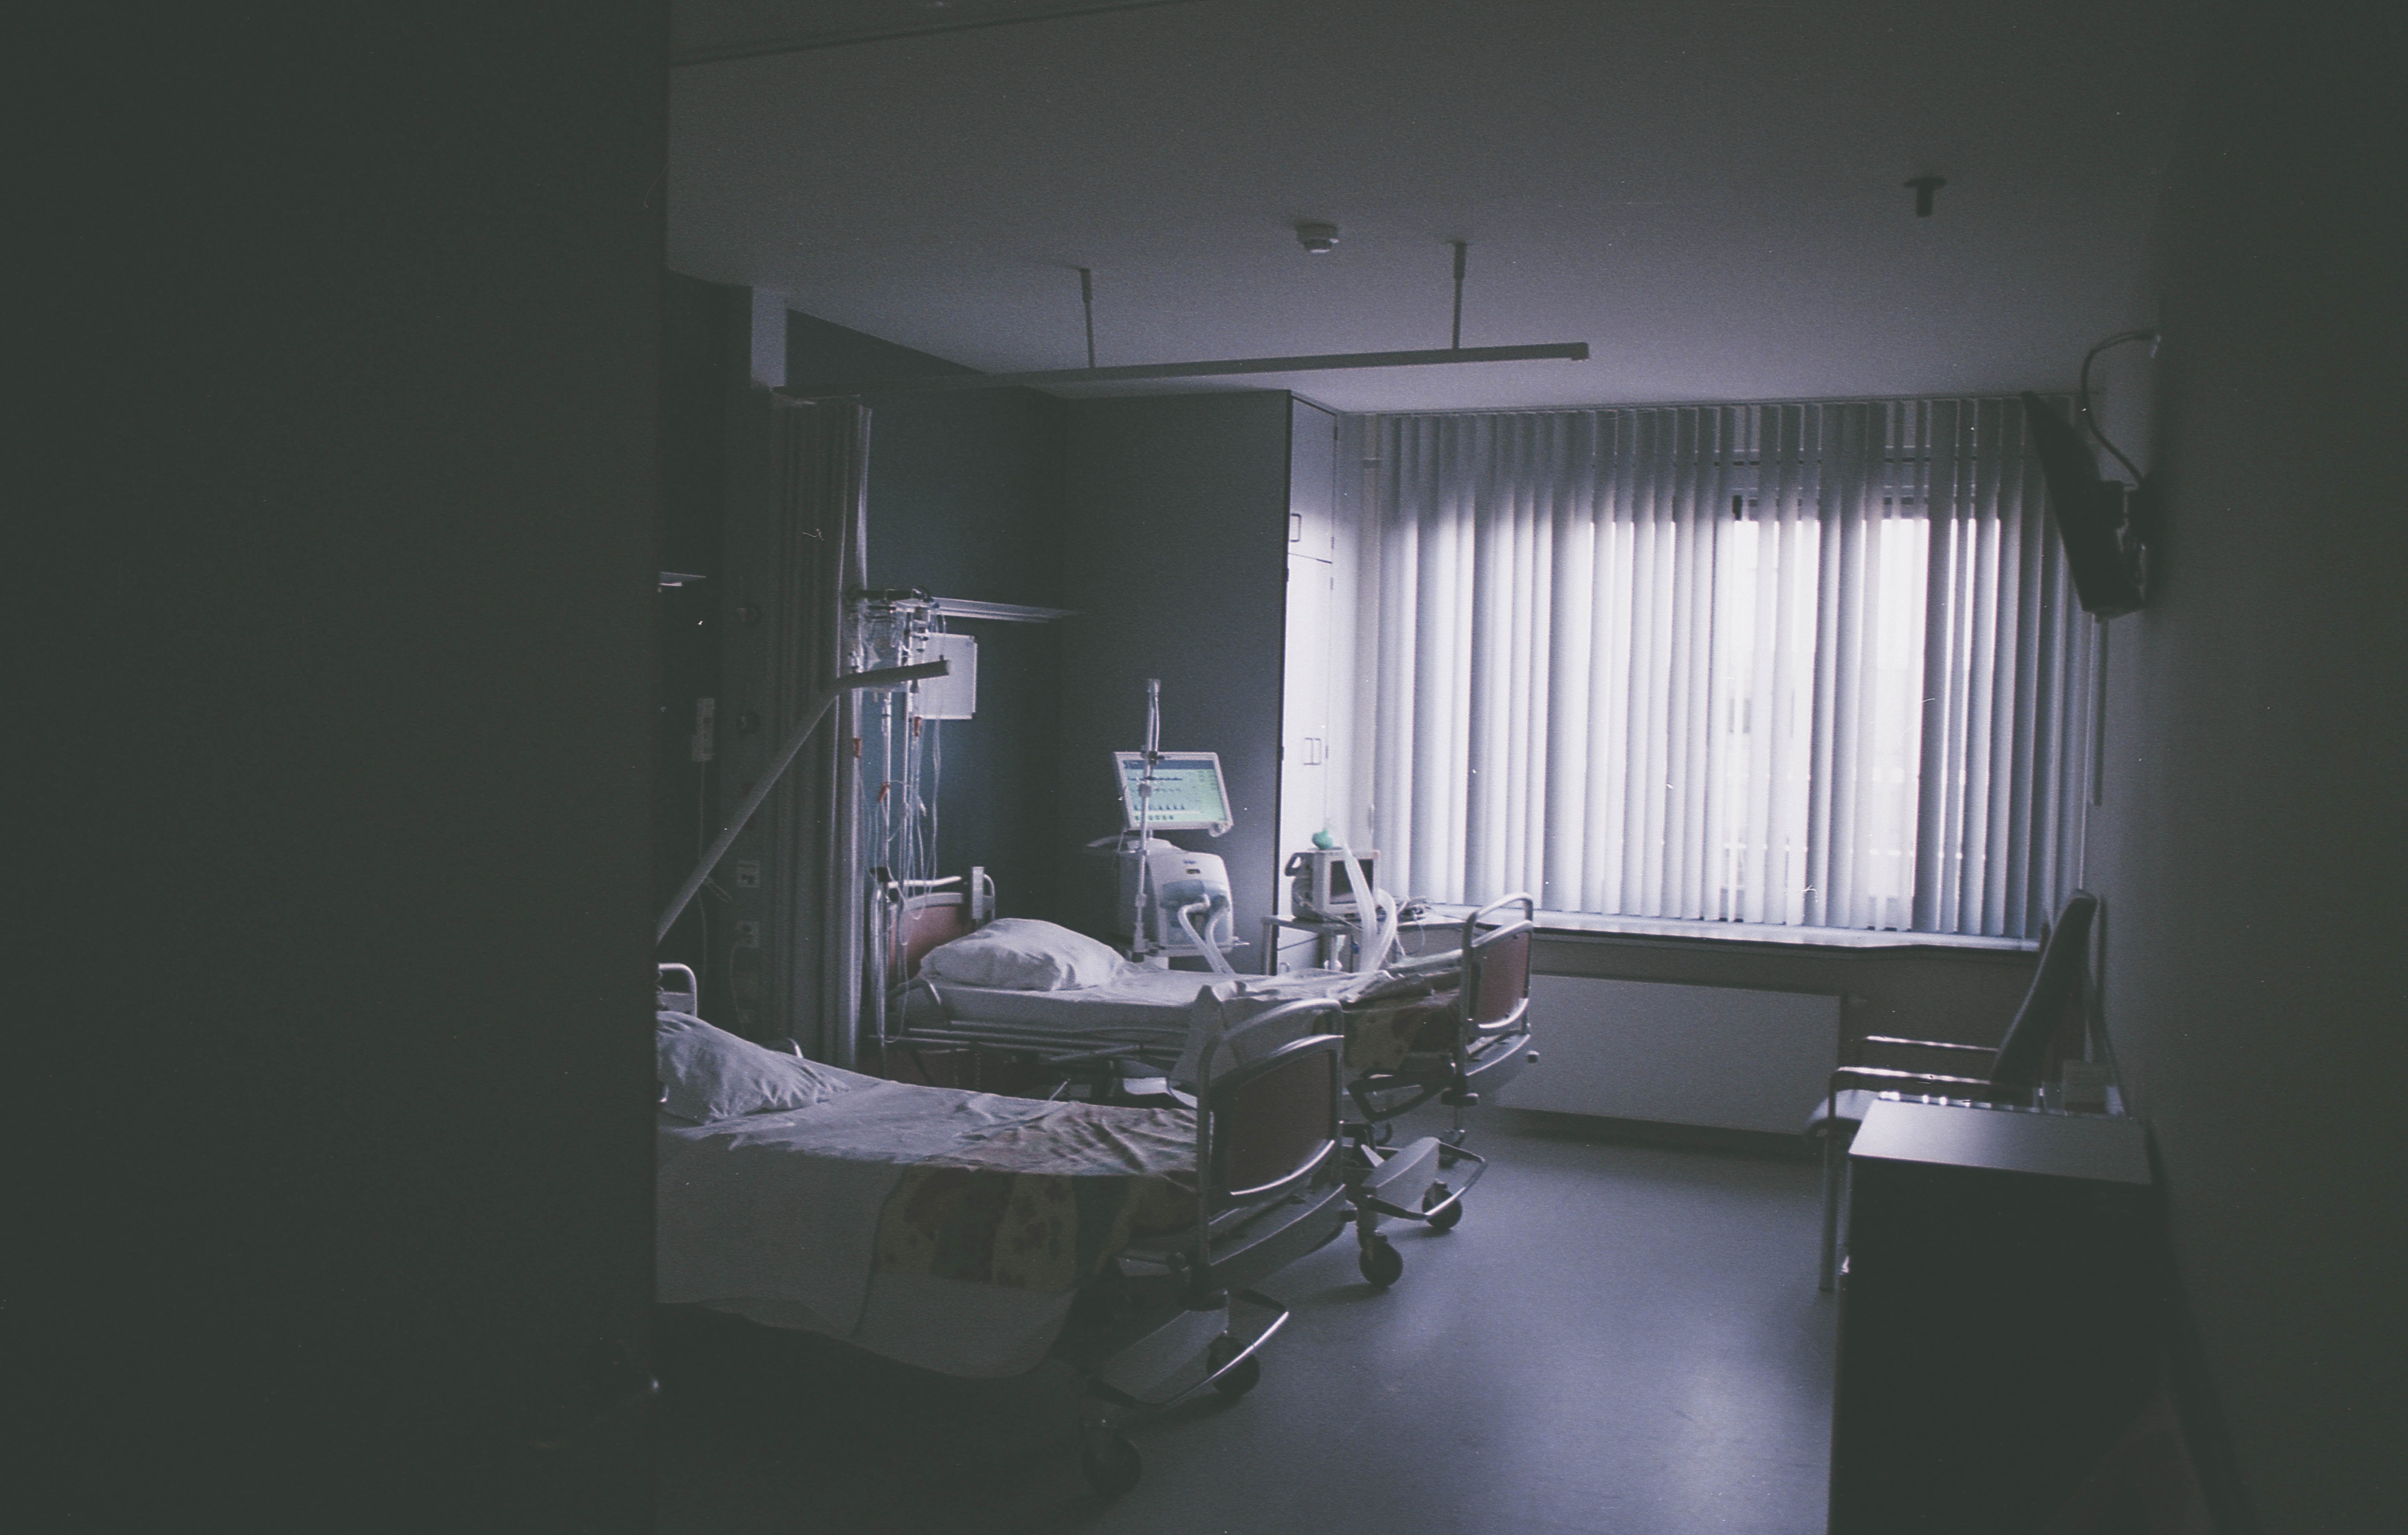 Hospital beds. | Source: Pixabay